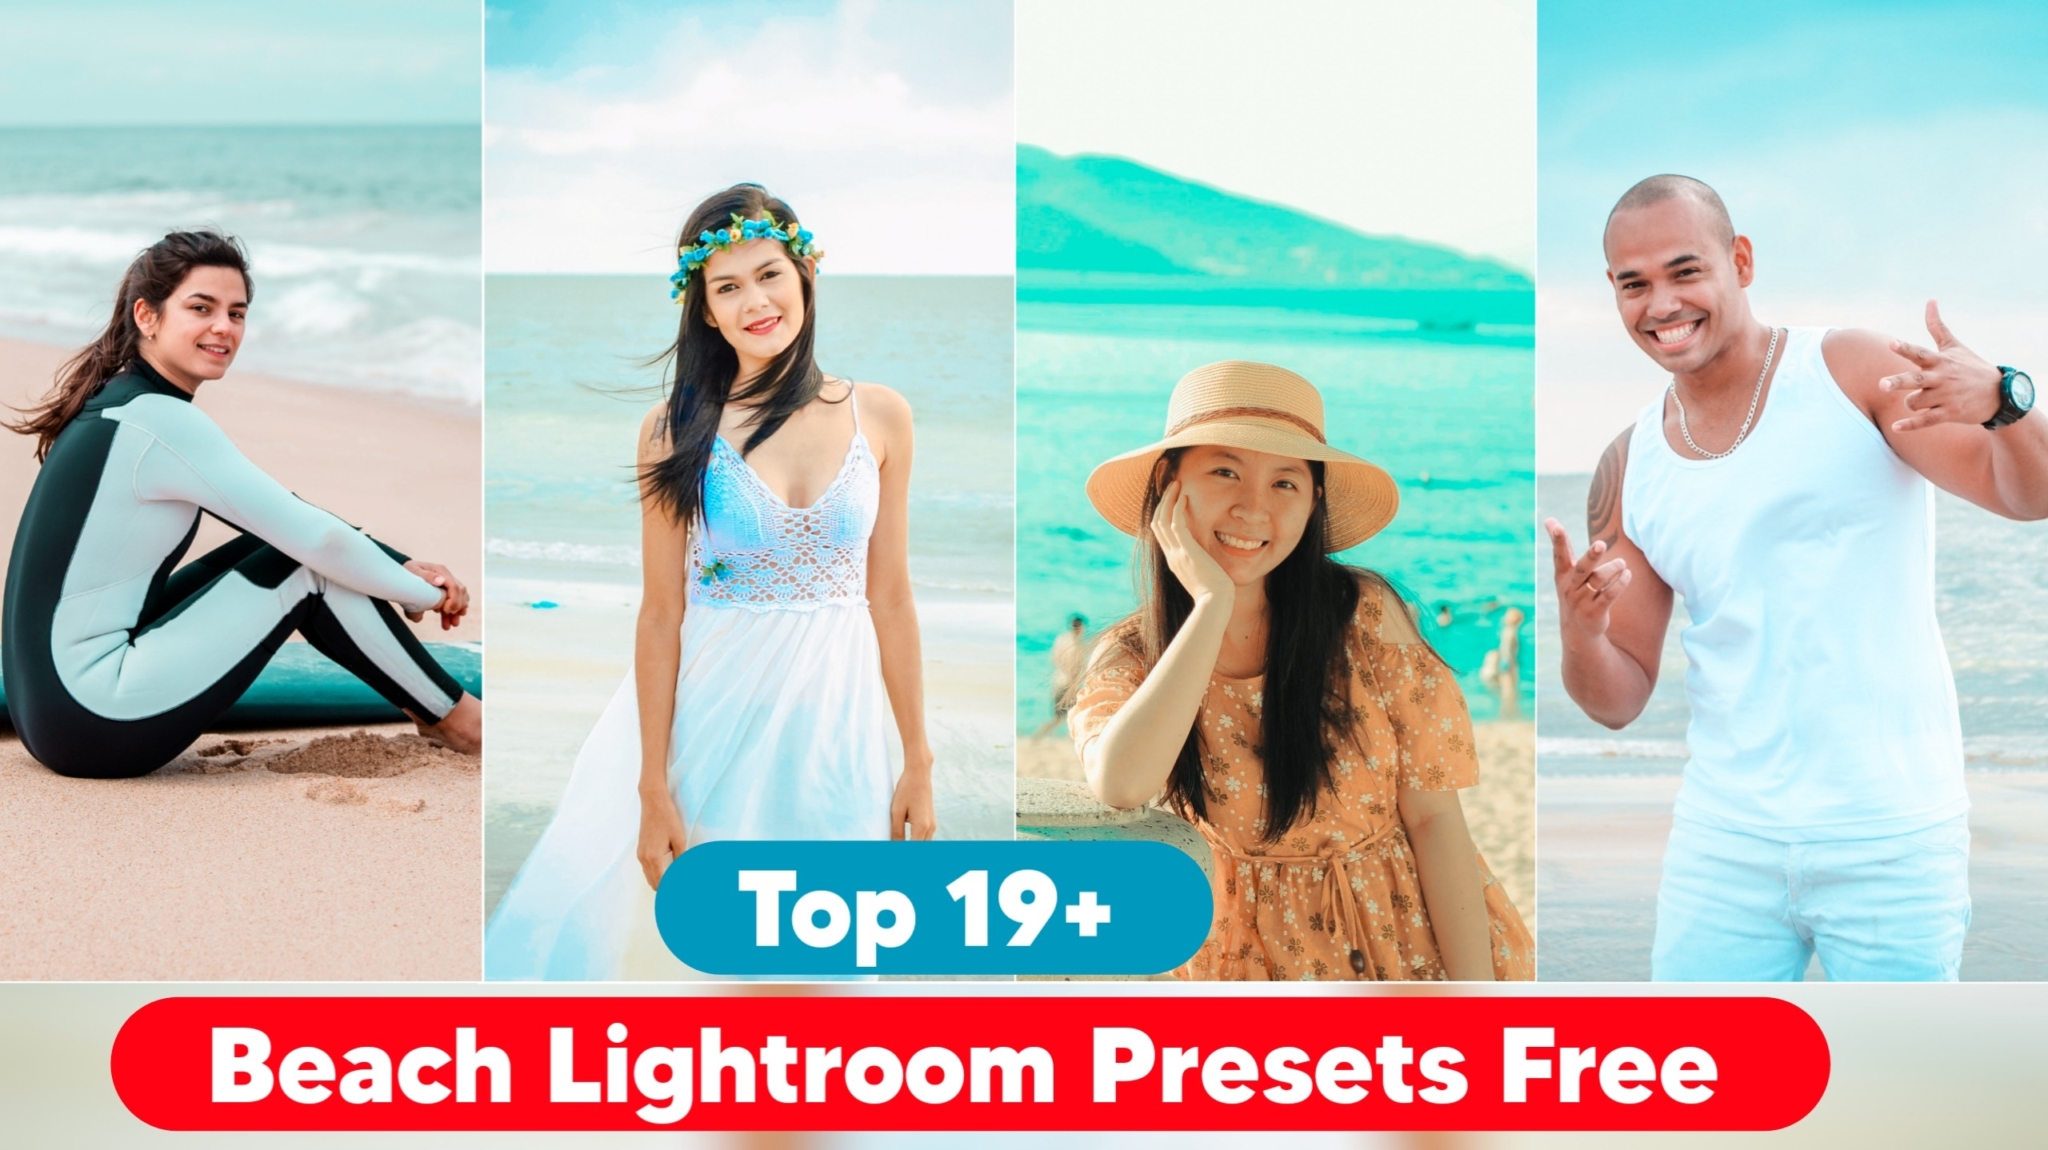 Top 19+ Beach Lightroom Presets Free